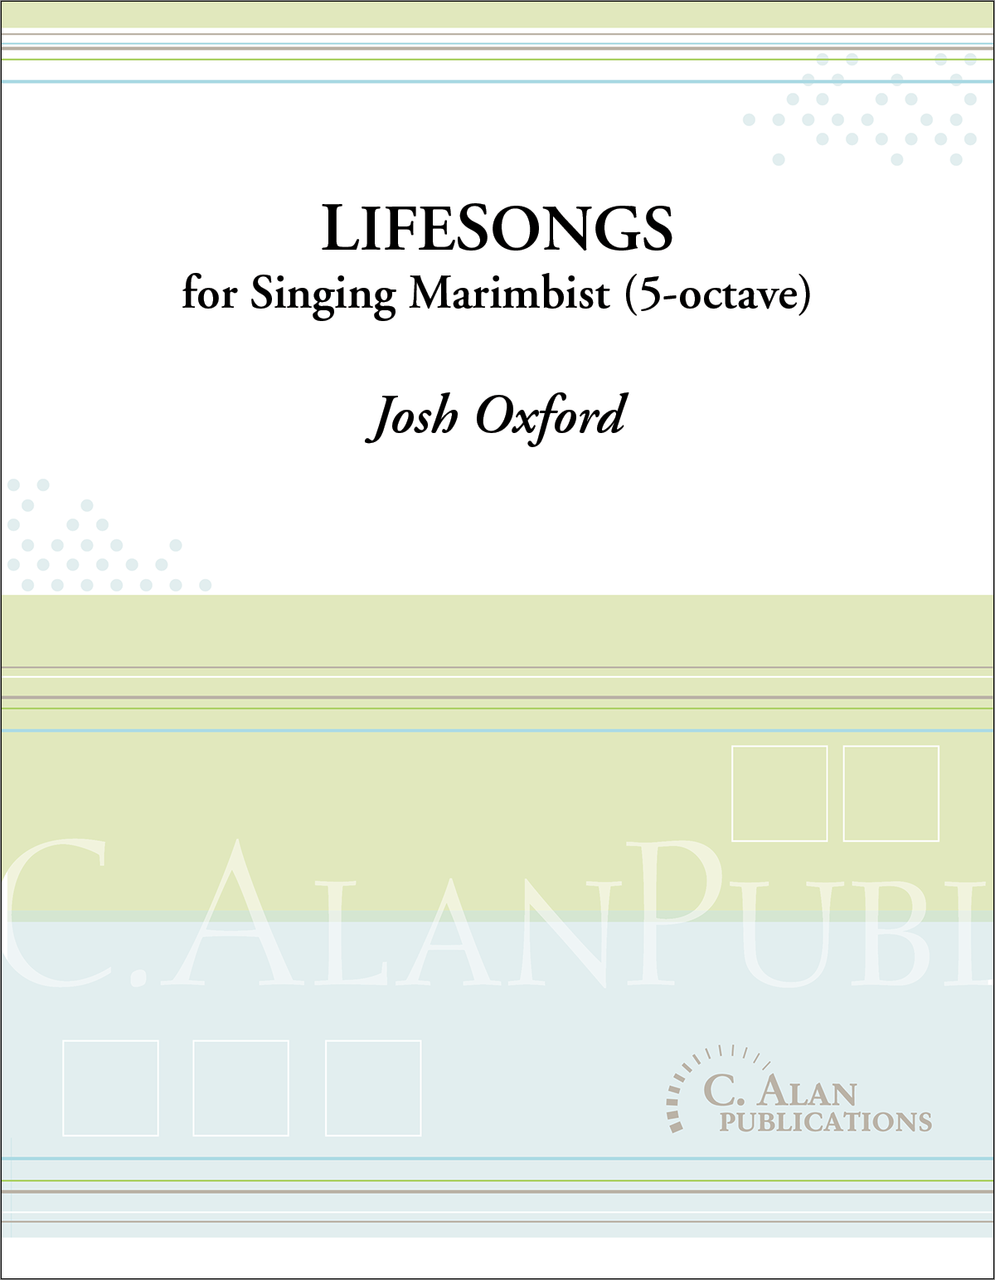 LifeSongs (for Singing Marimbist) by Josh Oxford